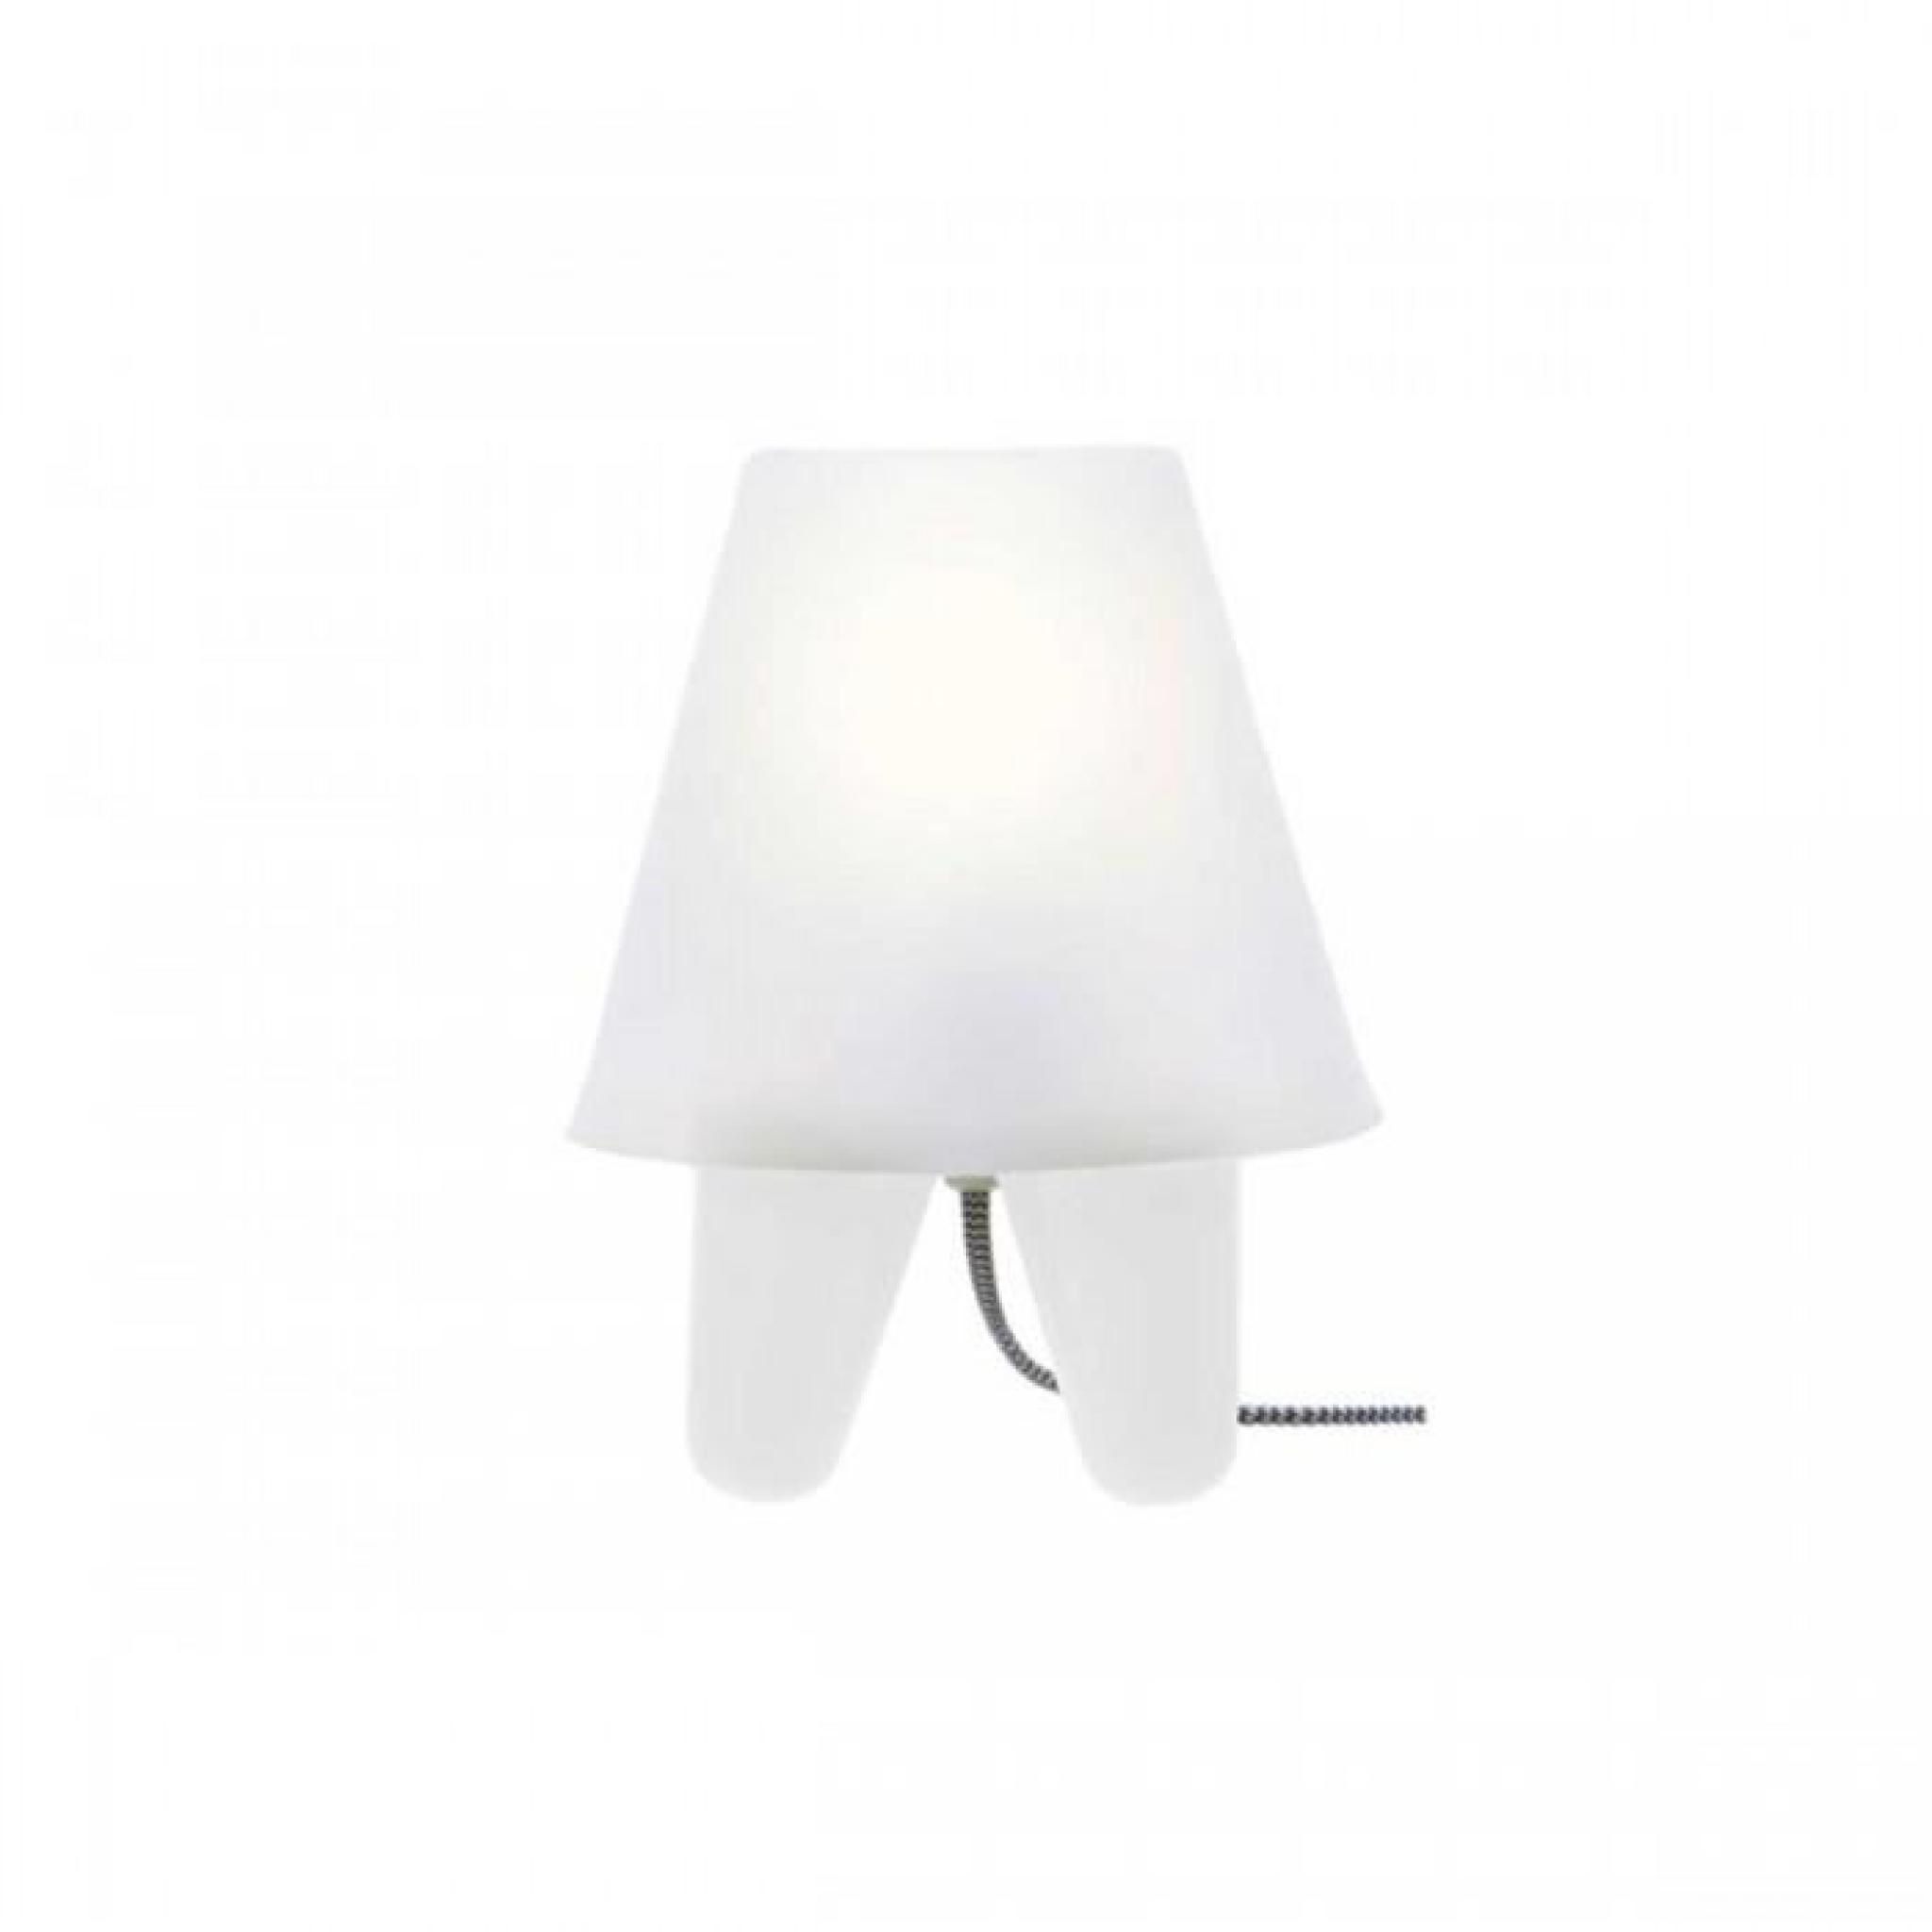 Lampe design Mushroom Couleur Blanche